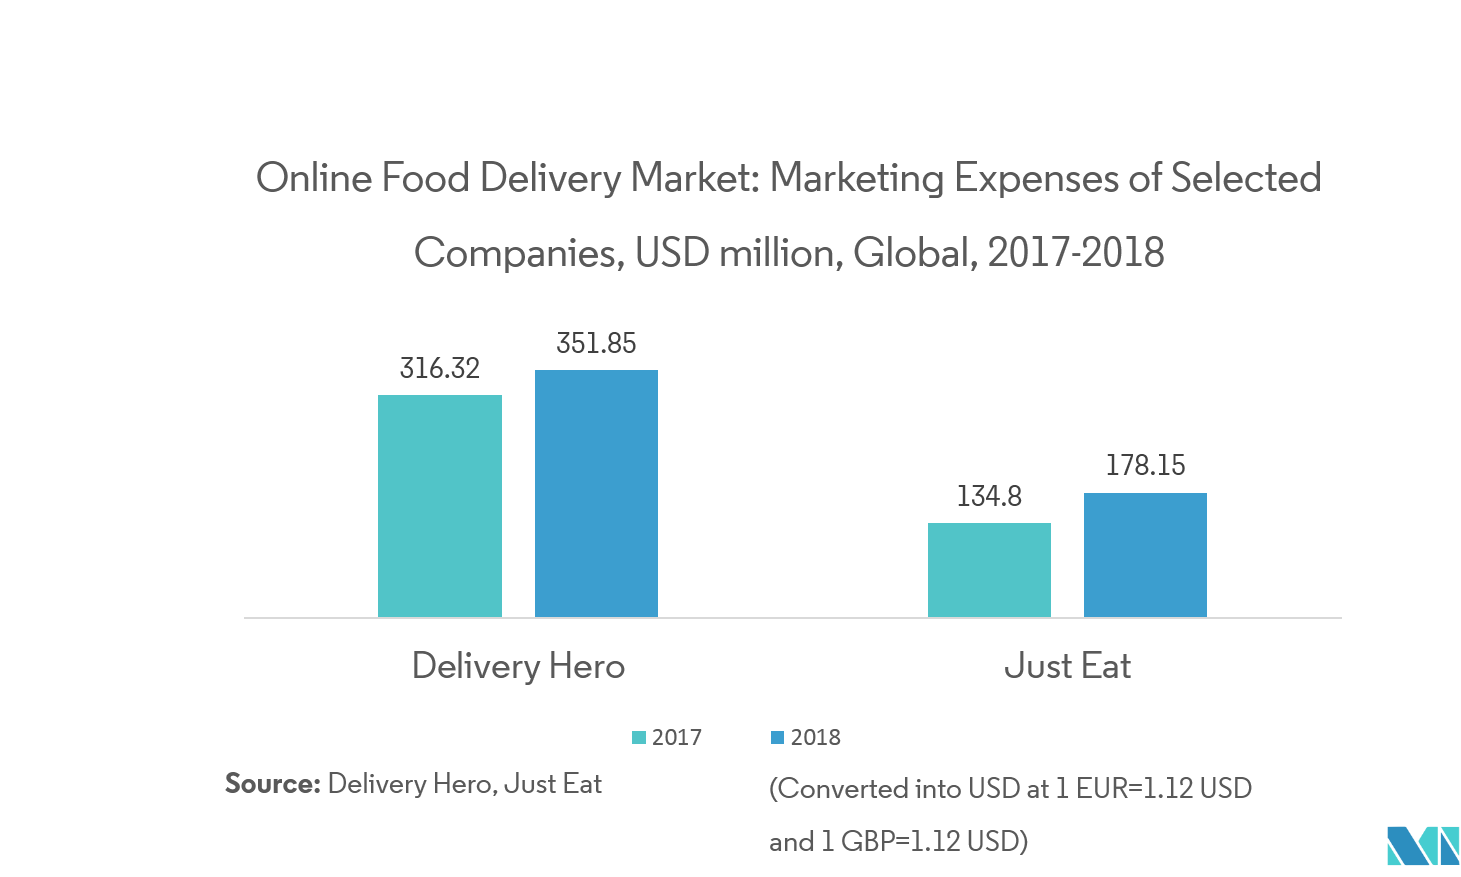 Online Food Delivery Market Share